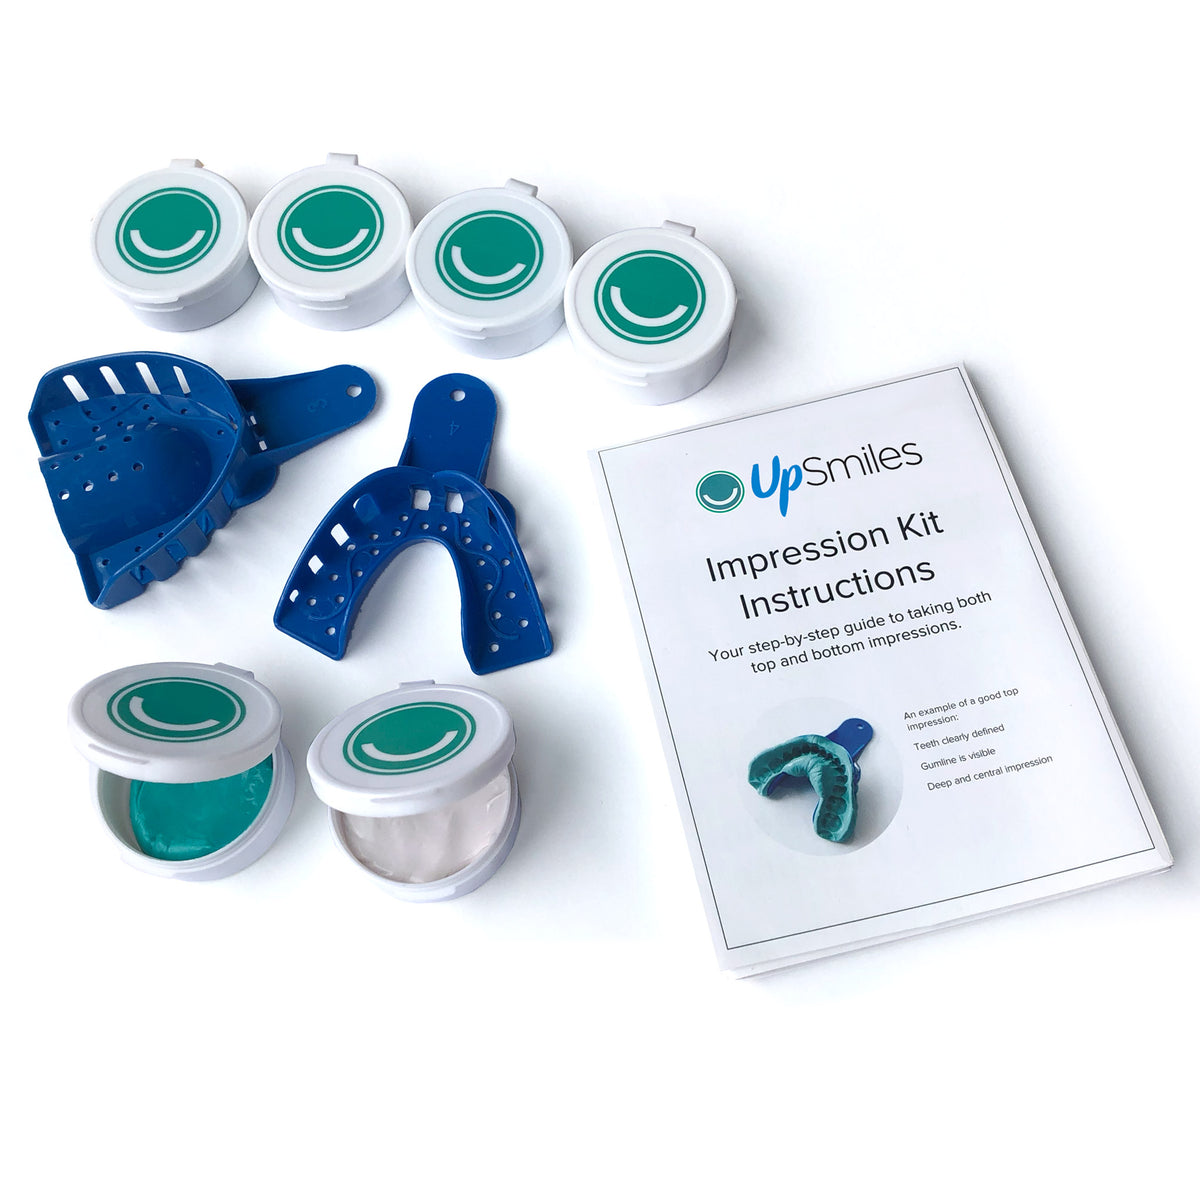 advanced teeth mold dental impression kit